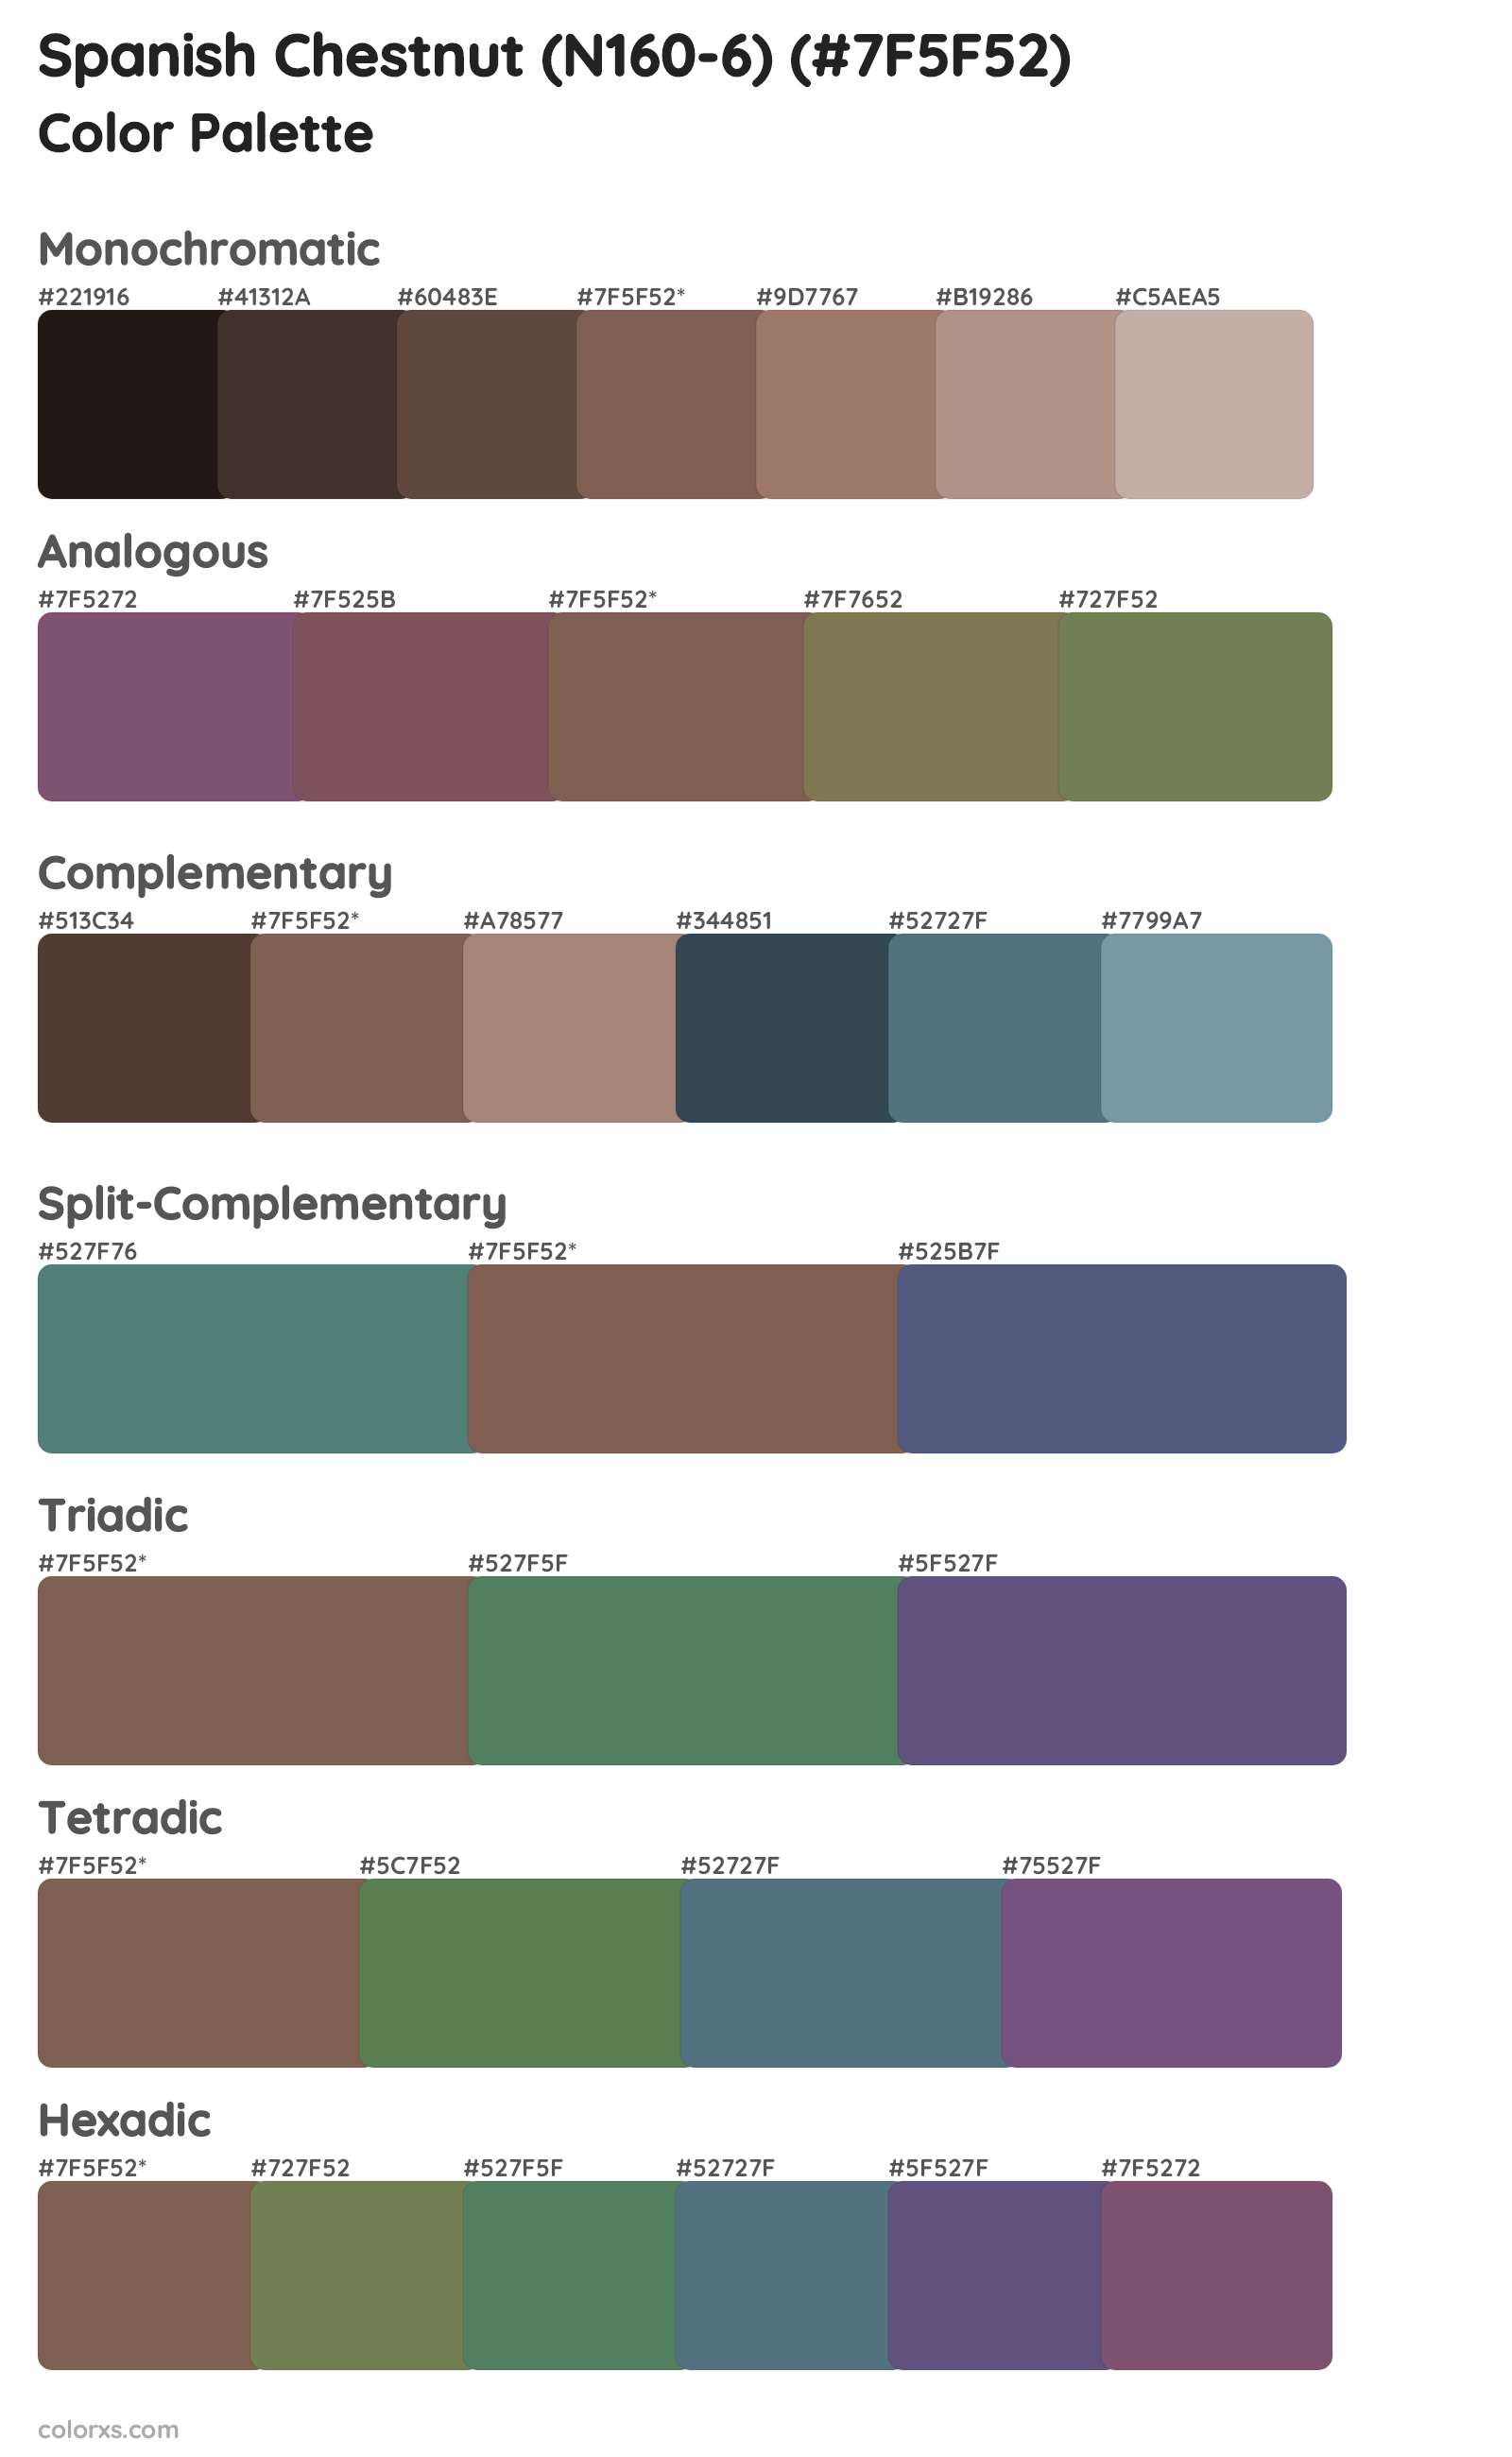 Spanish Chestnut (N160-6) Color Scheme Palettes